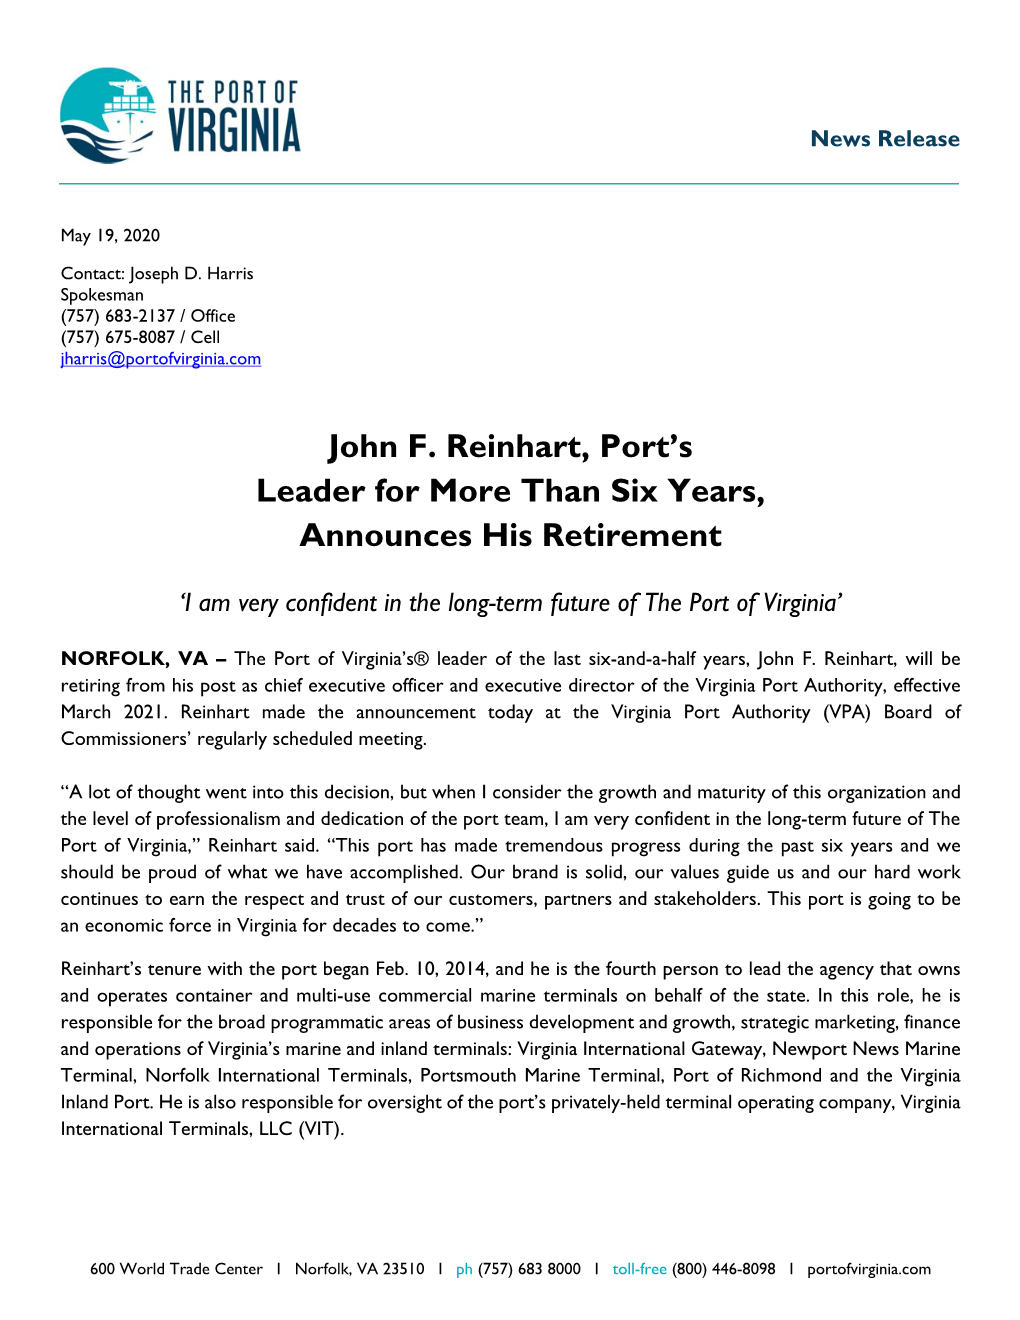 John F. Reinhart, Port's Leader for More Than Six Years, Announces